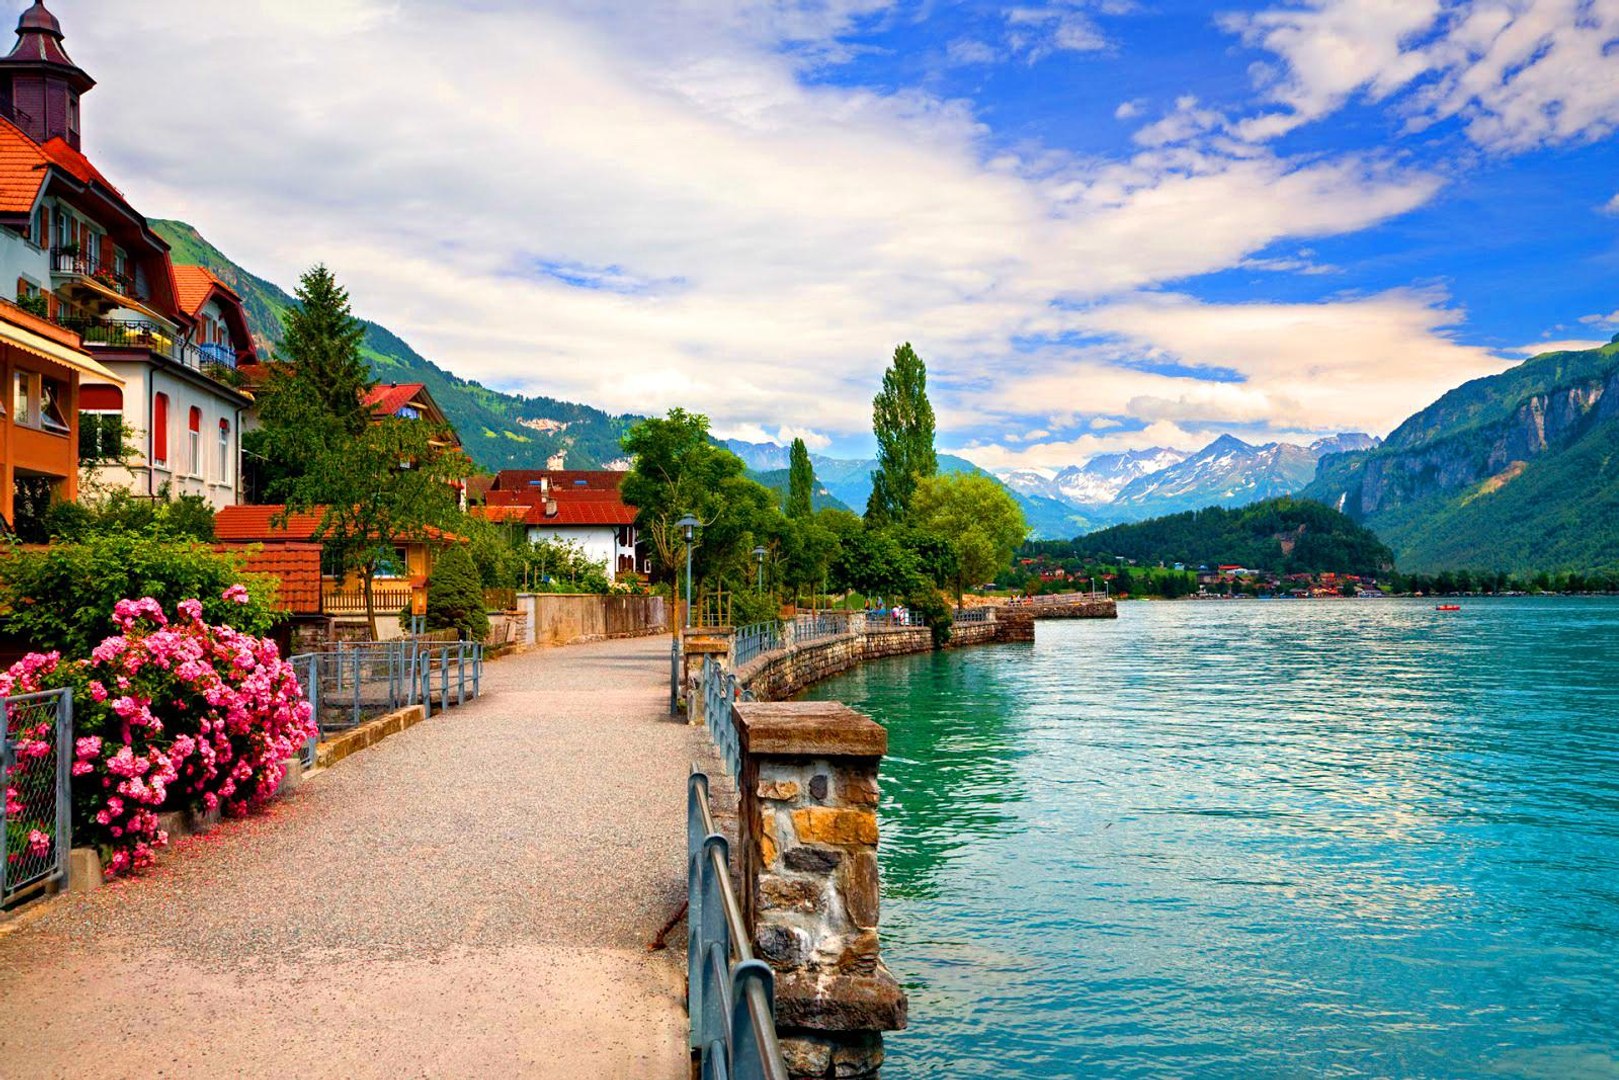 Find beautiful tourist spots at Switzerland - Fashion4Home